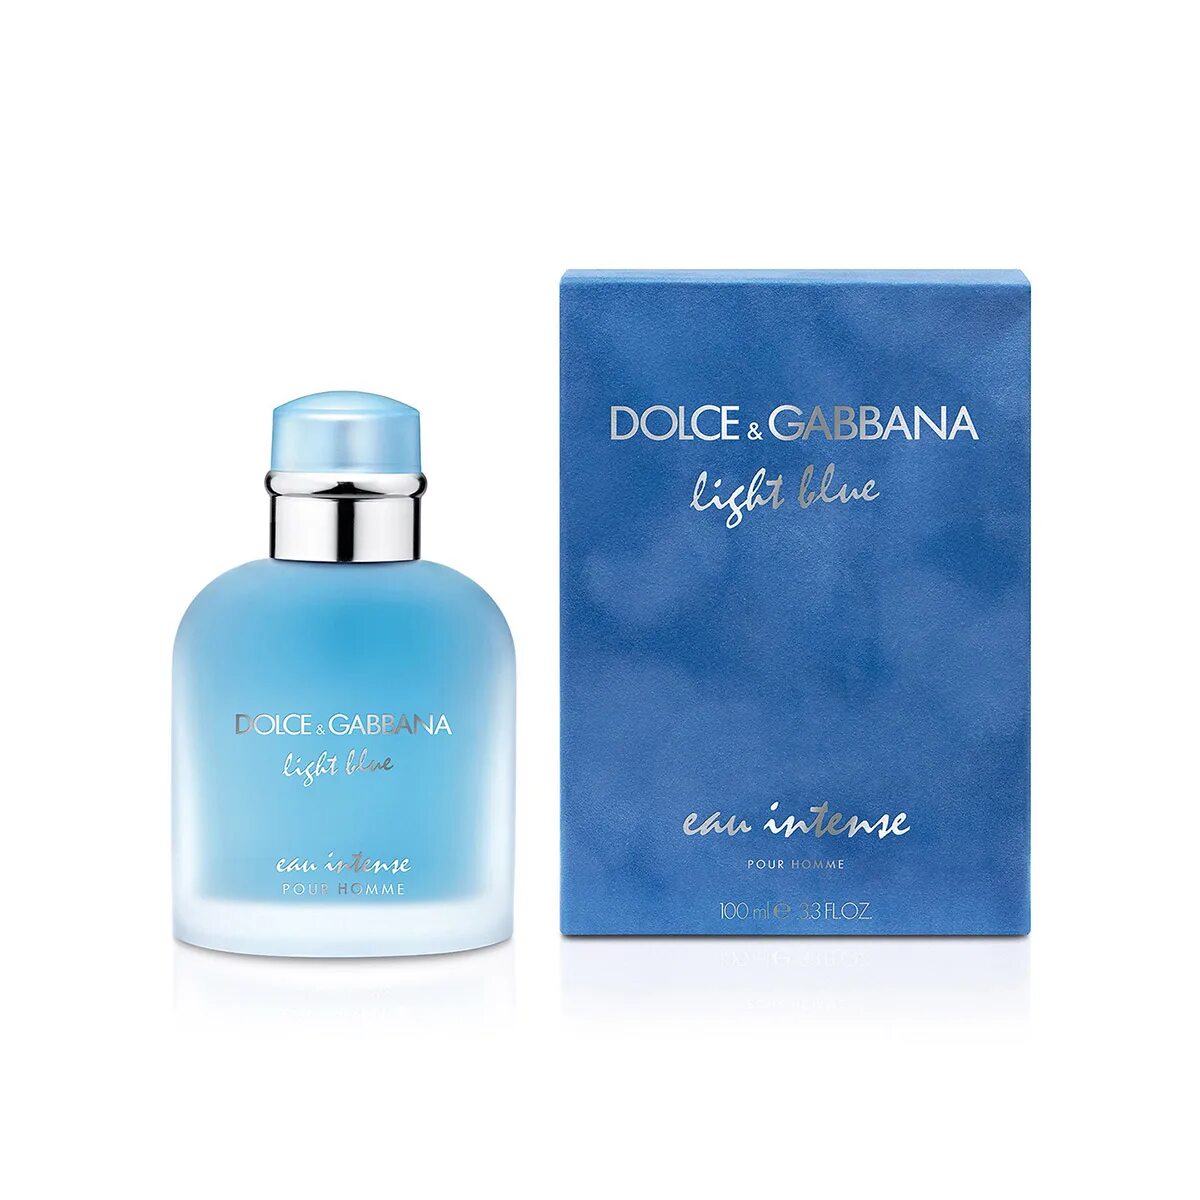 Dolce & Gabbana Light Blue Eau intense. Дольче Габбана Лайт Блю.comинтенс. Духи Dolce Gabbana Light Blue мужские. Дольче Габбана Лайт Блю 50 мл. Туалетная вода дольче габбана лайт